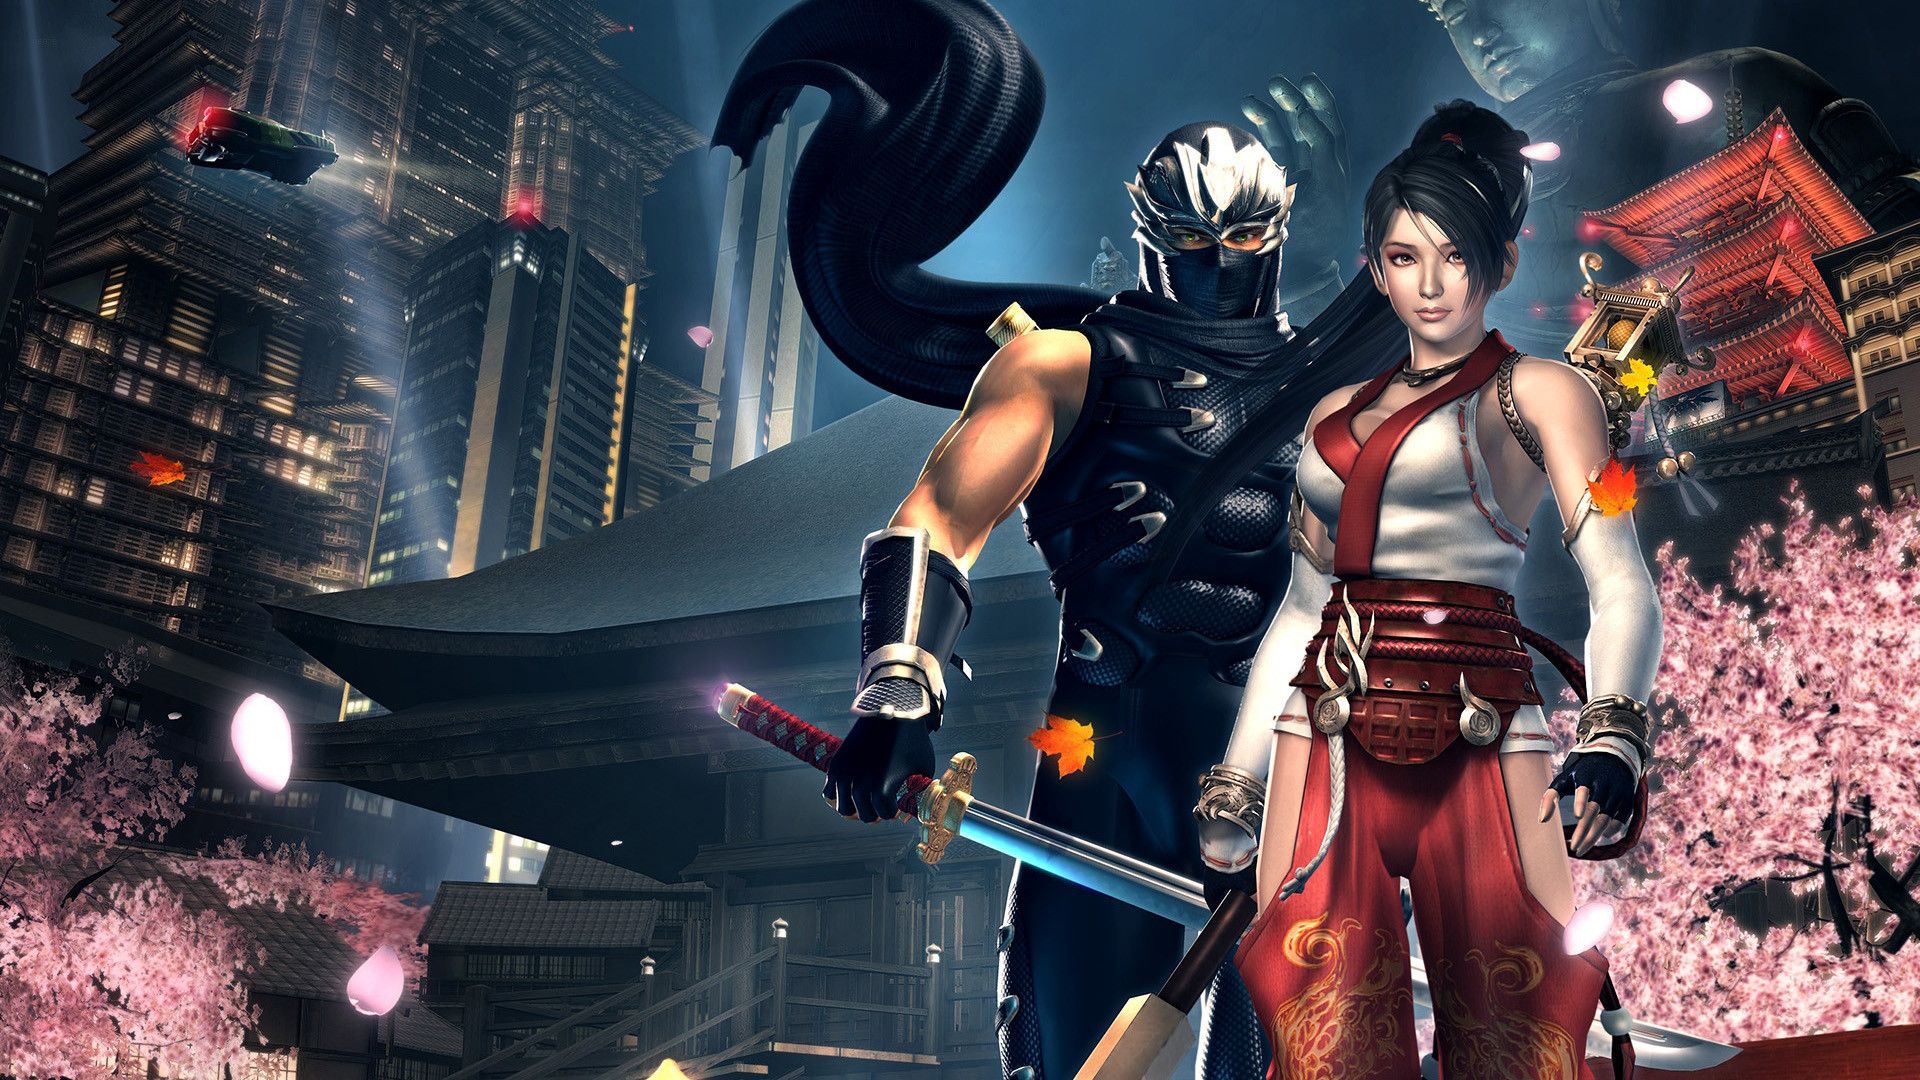 Image for DF Retro EX: Ninja Gaiden 2 on Xbox One X vs All Platforms!